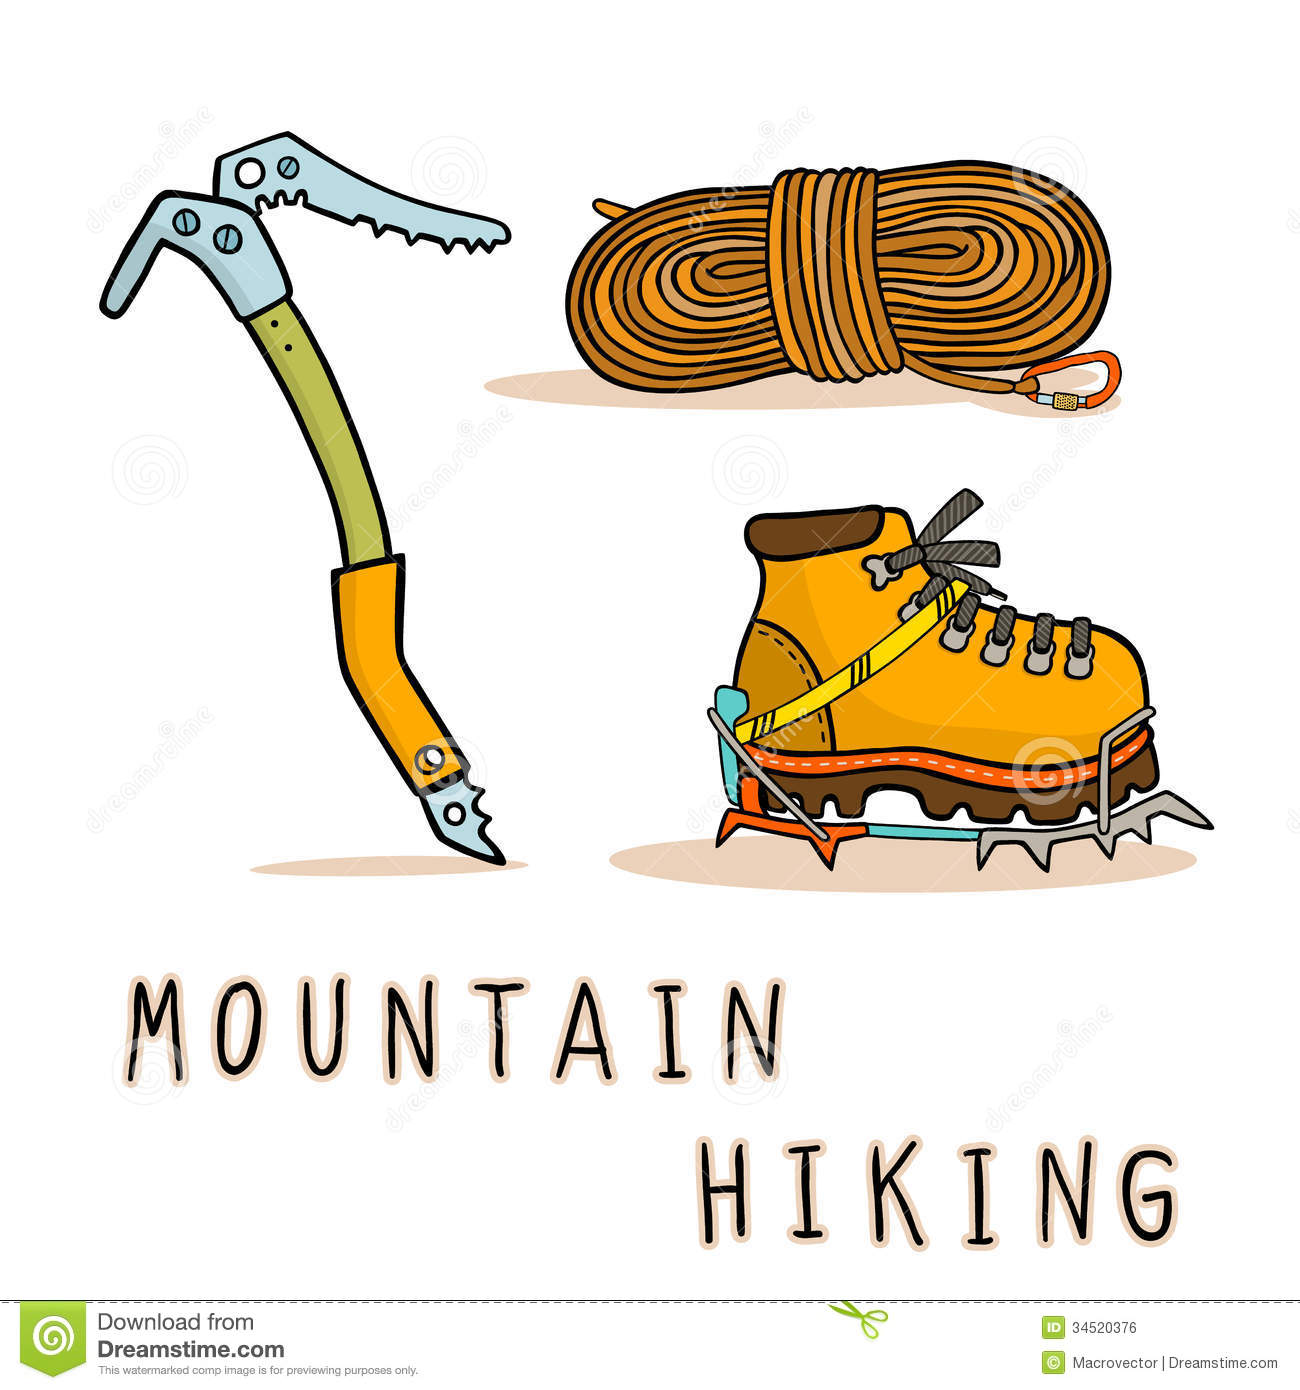 Mountain Hiking Royalty Free Stock Image   Image  34520376